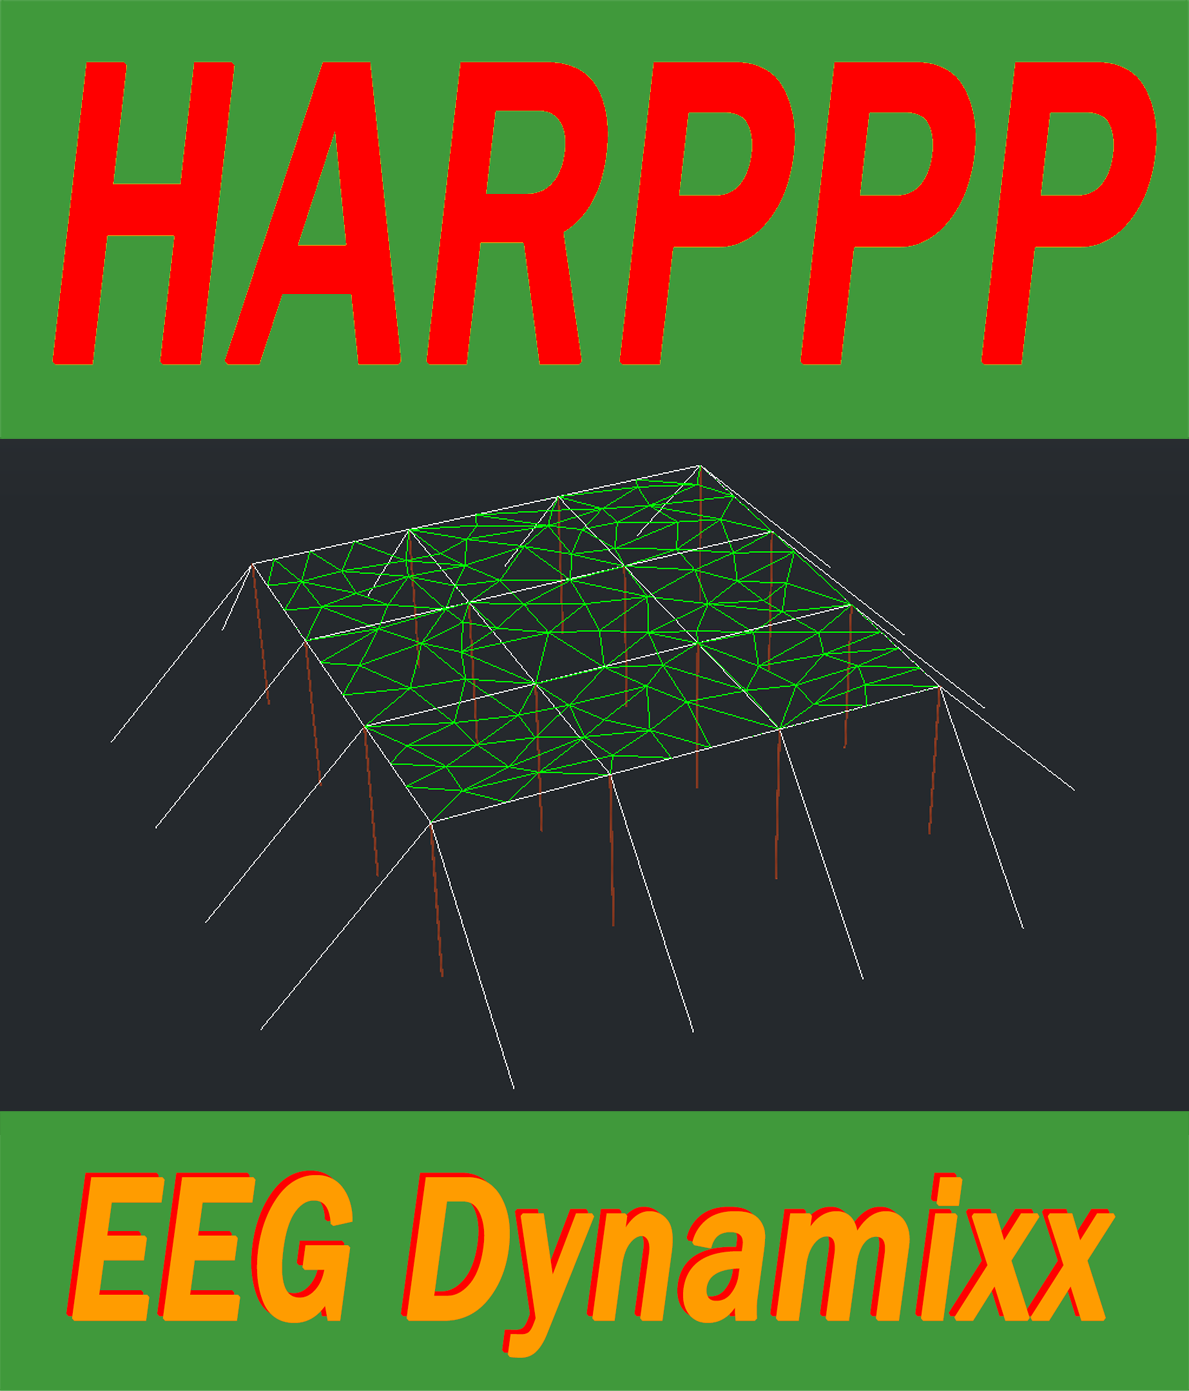 01-02 - HARPPP-EEG[flattened,trimmed] - (2014,02,20)